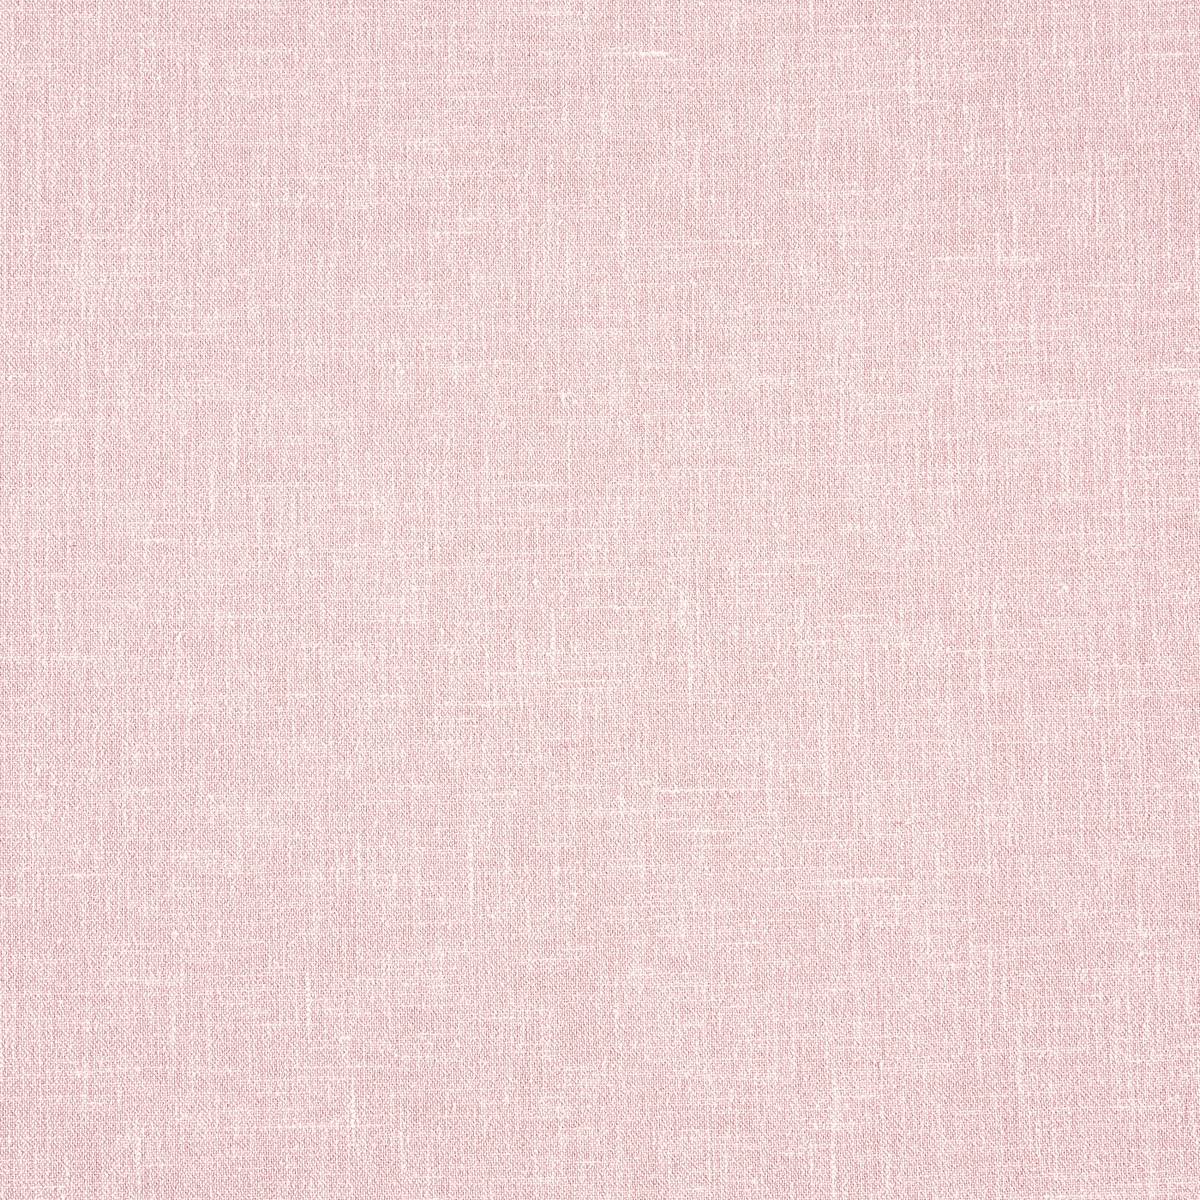 Drift Powder Pink Fabric by Prestigious Textiles